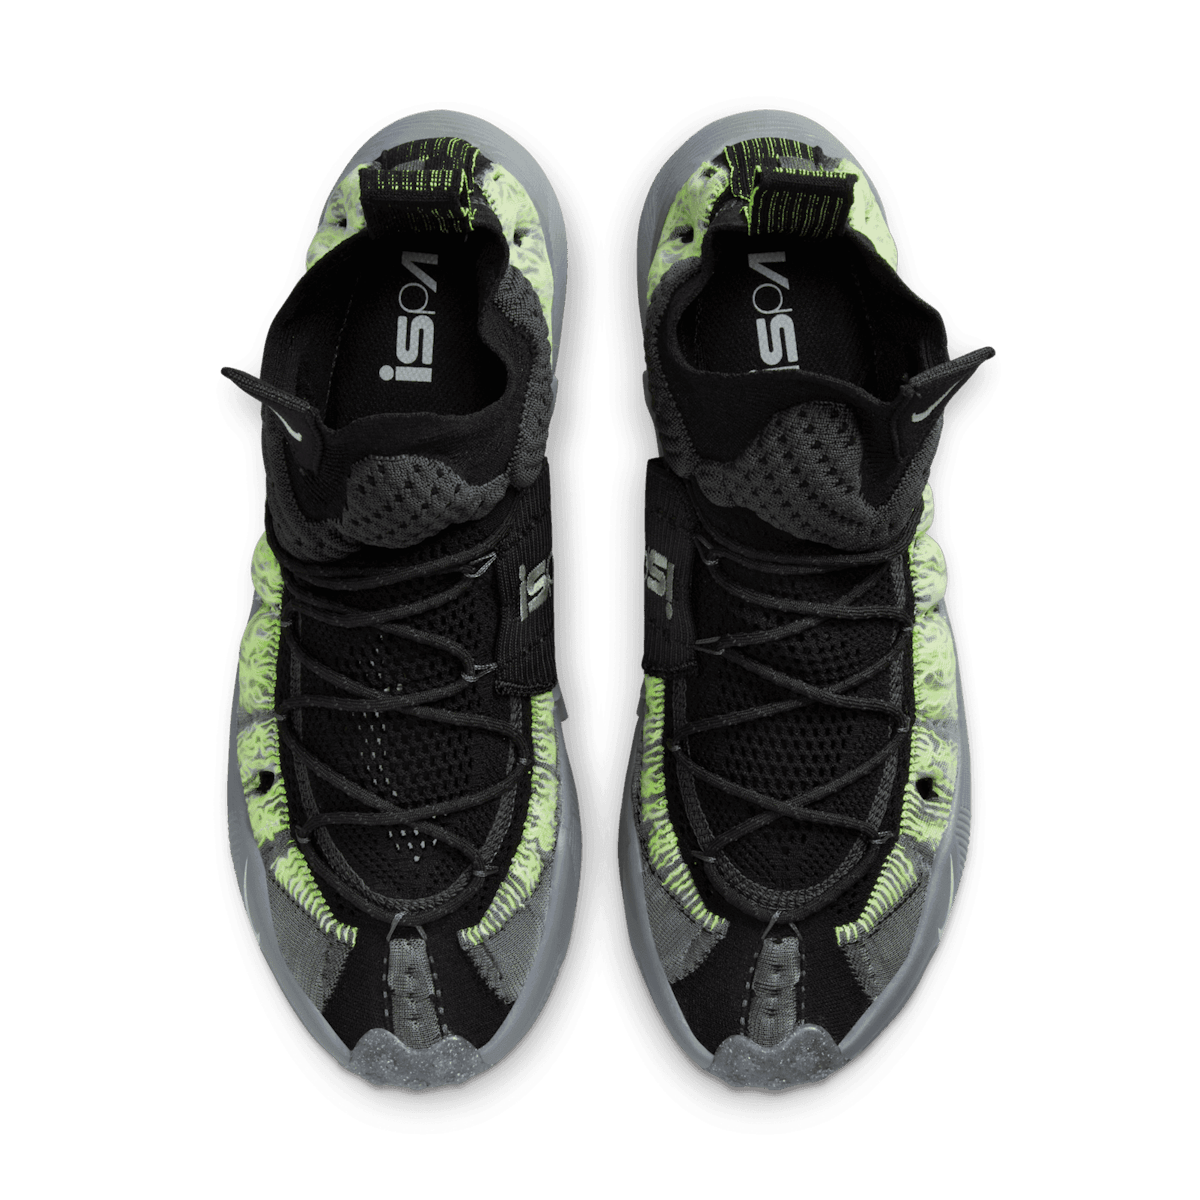 Nike ISPA Sense Flyknit Black Green Angle 1